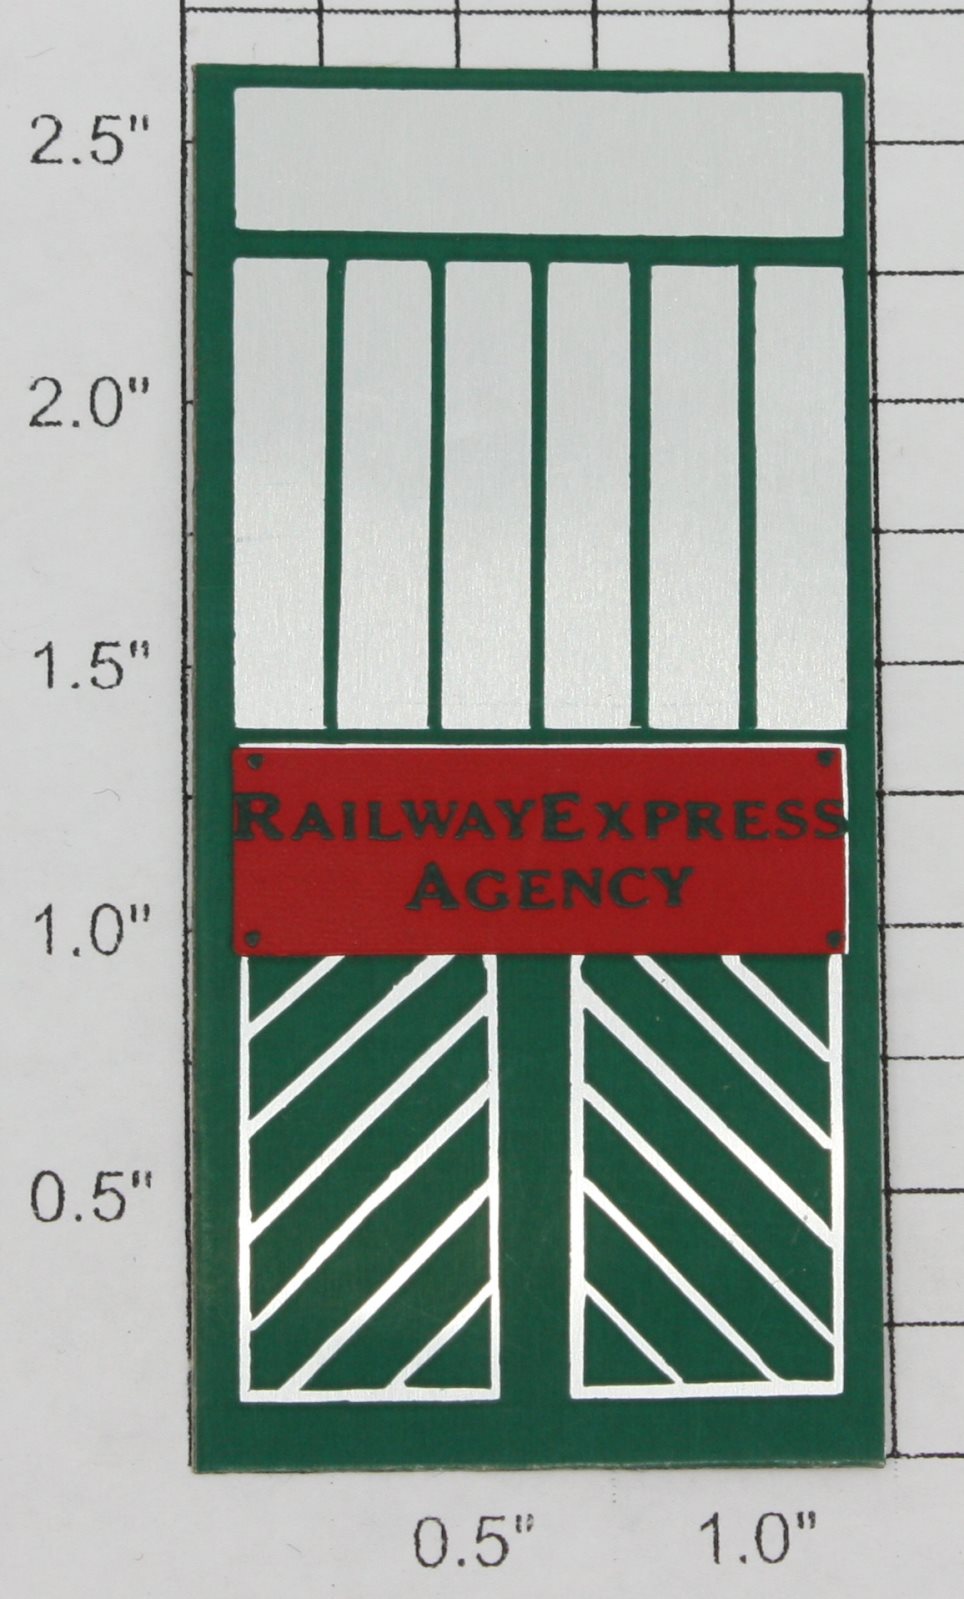 Noma 450-4 "Railway Express Agency" Light Green Door w/ Adhesive on Back